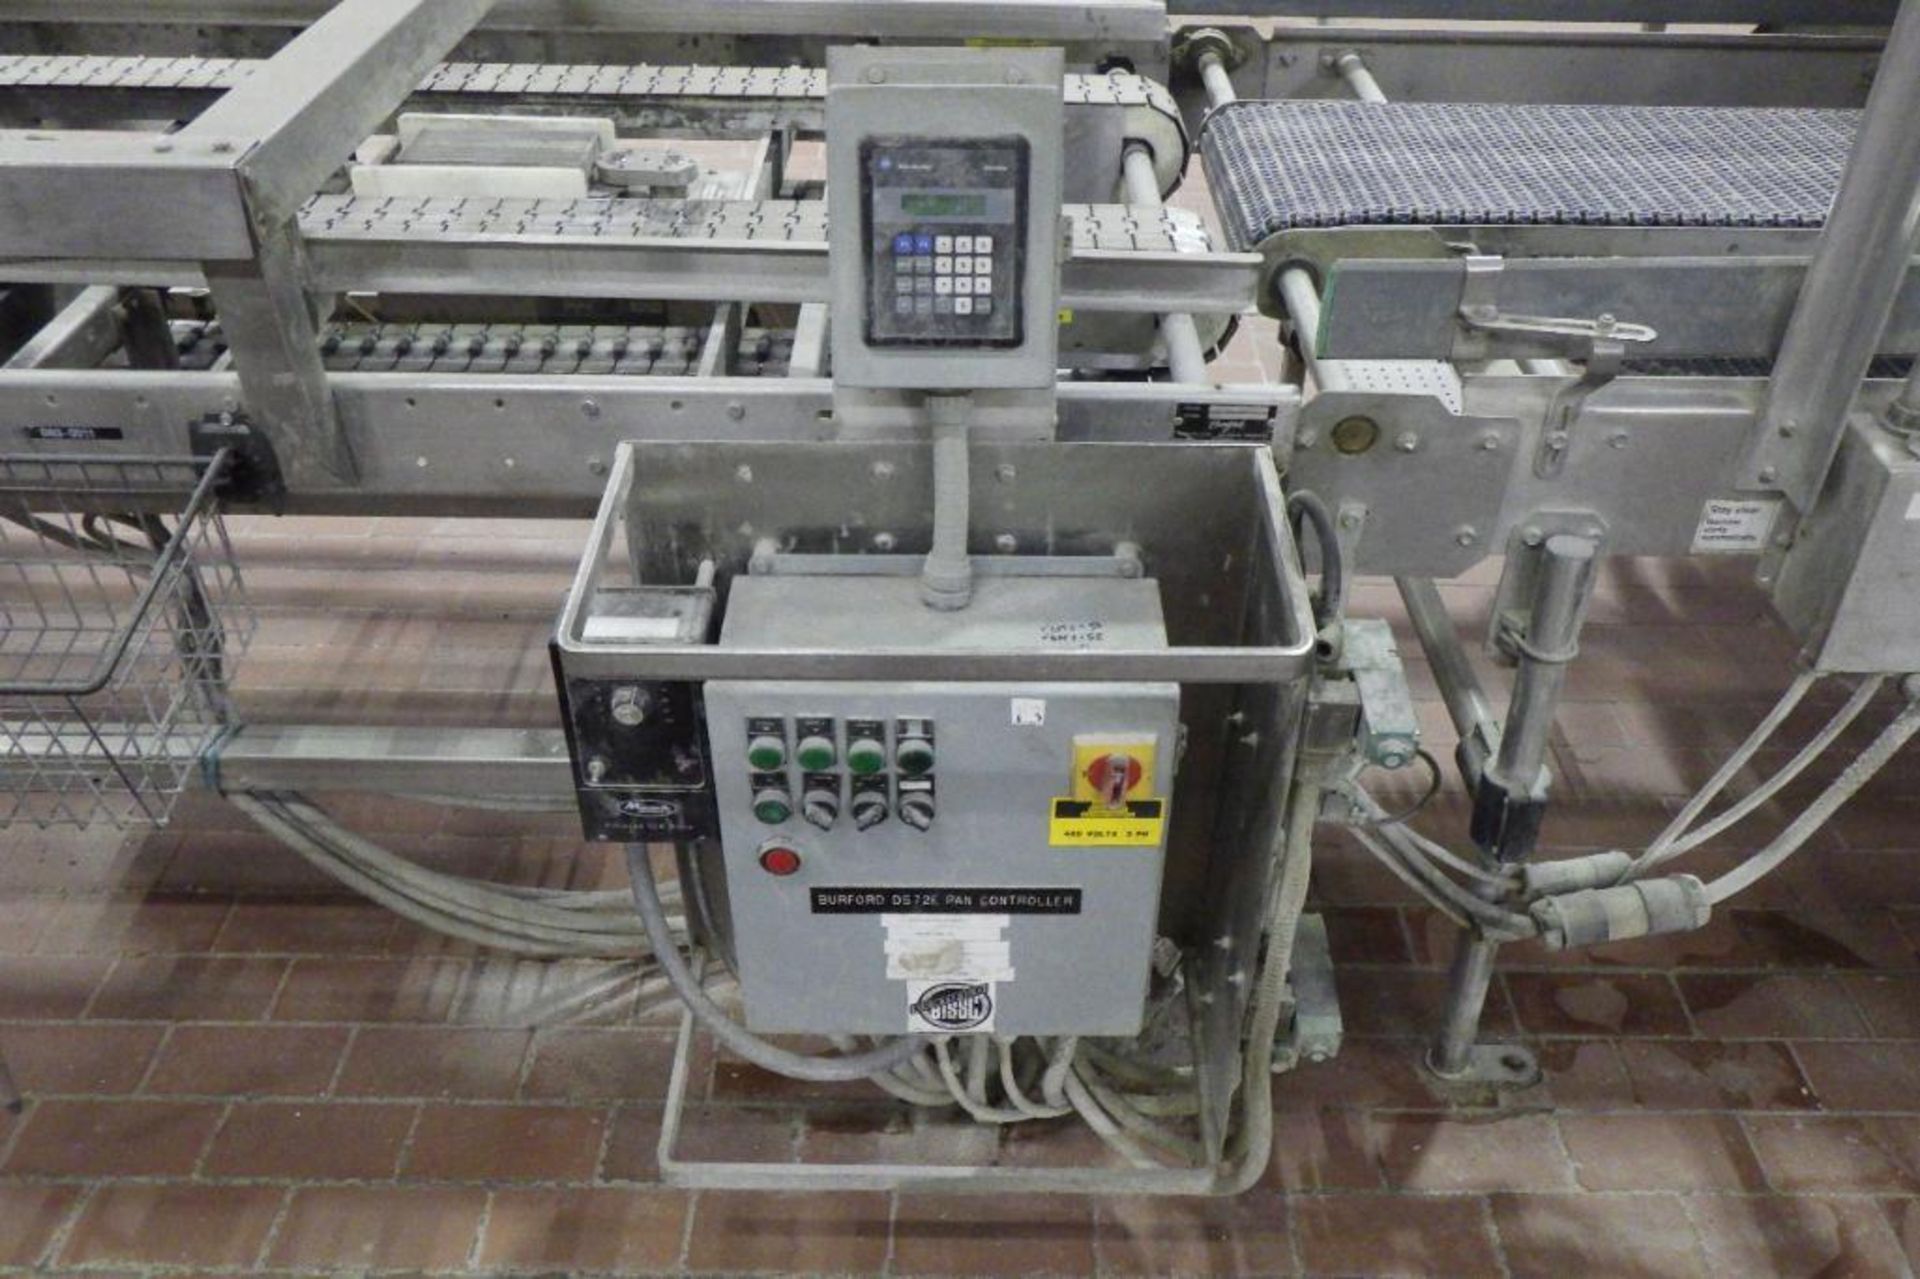 Burford pan controller conveyor and pan shaker - Image 10 of 16